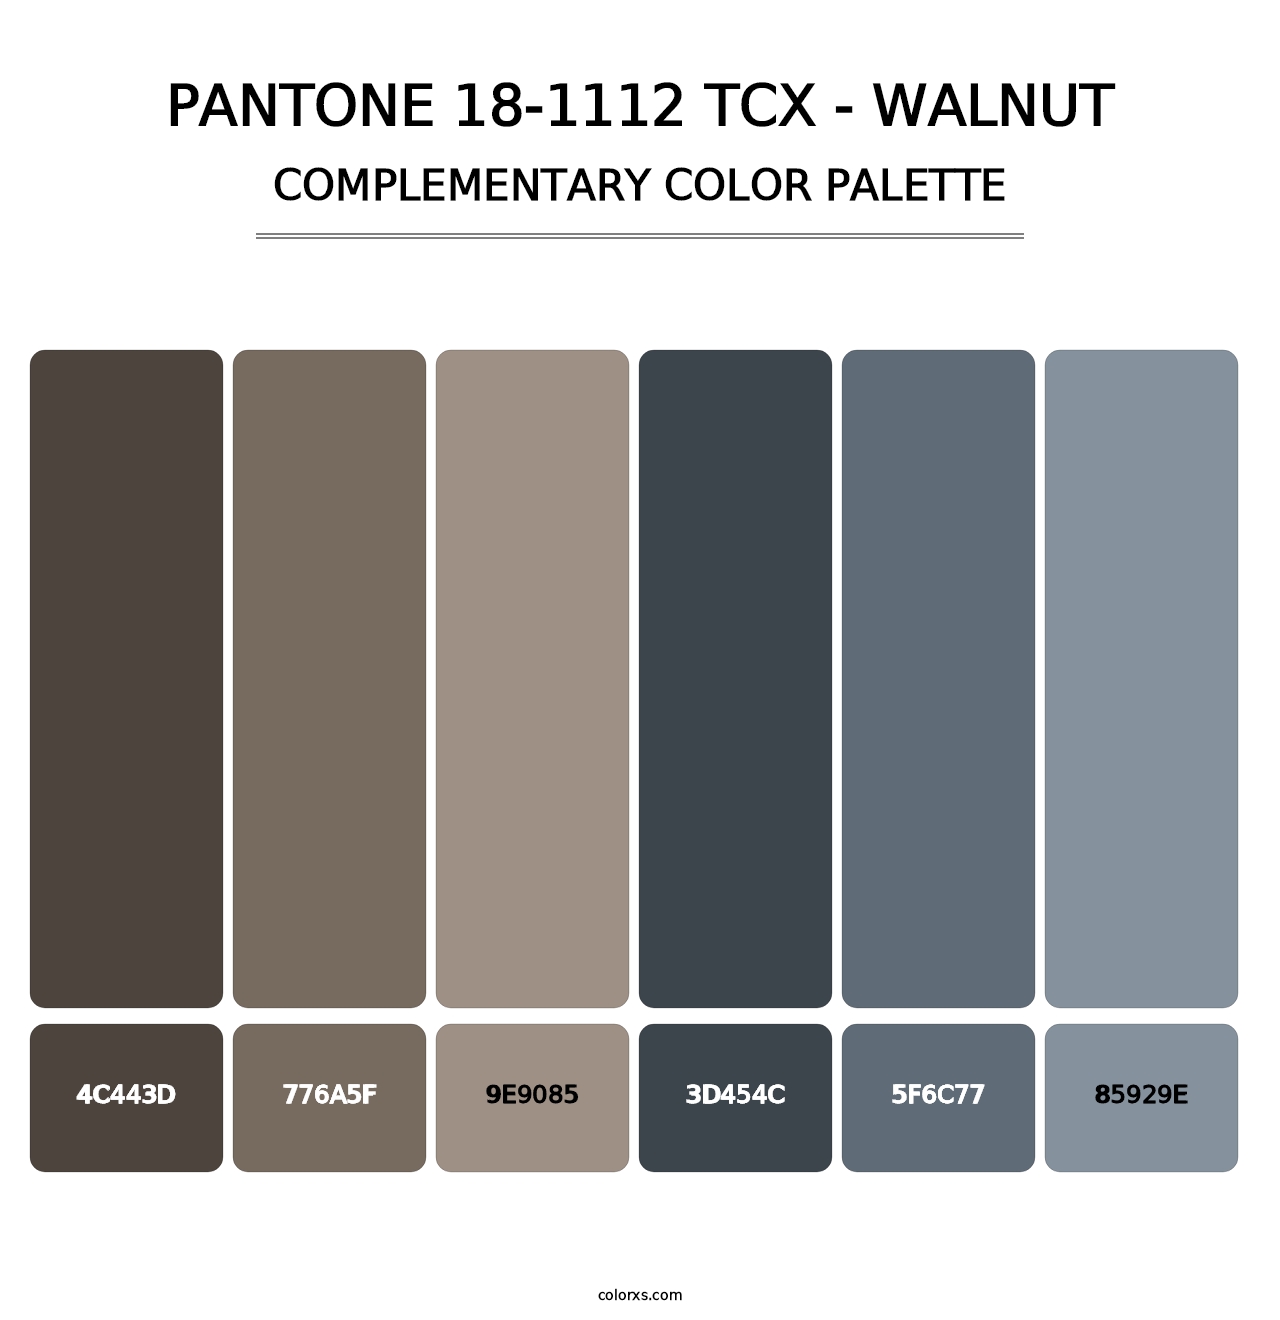 PANTONE 18-1112 TCX - Walnut - Complementary Color Palette